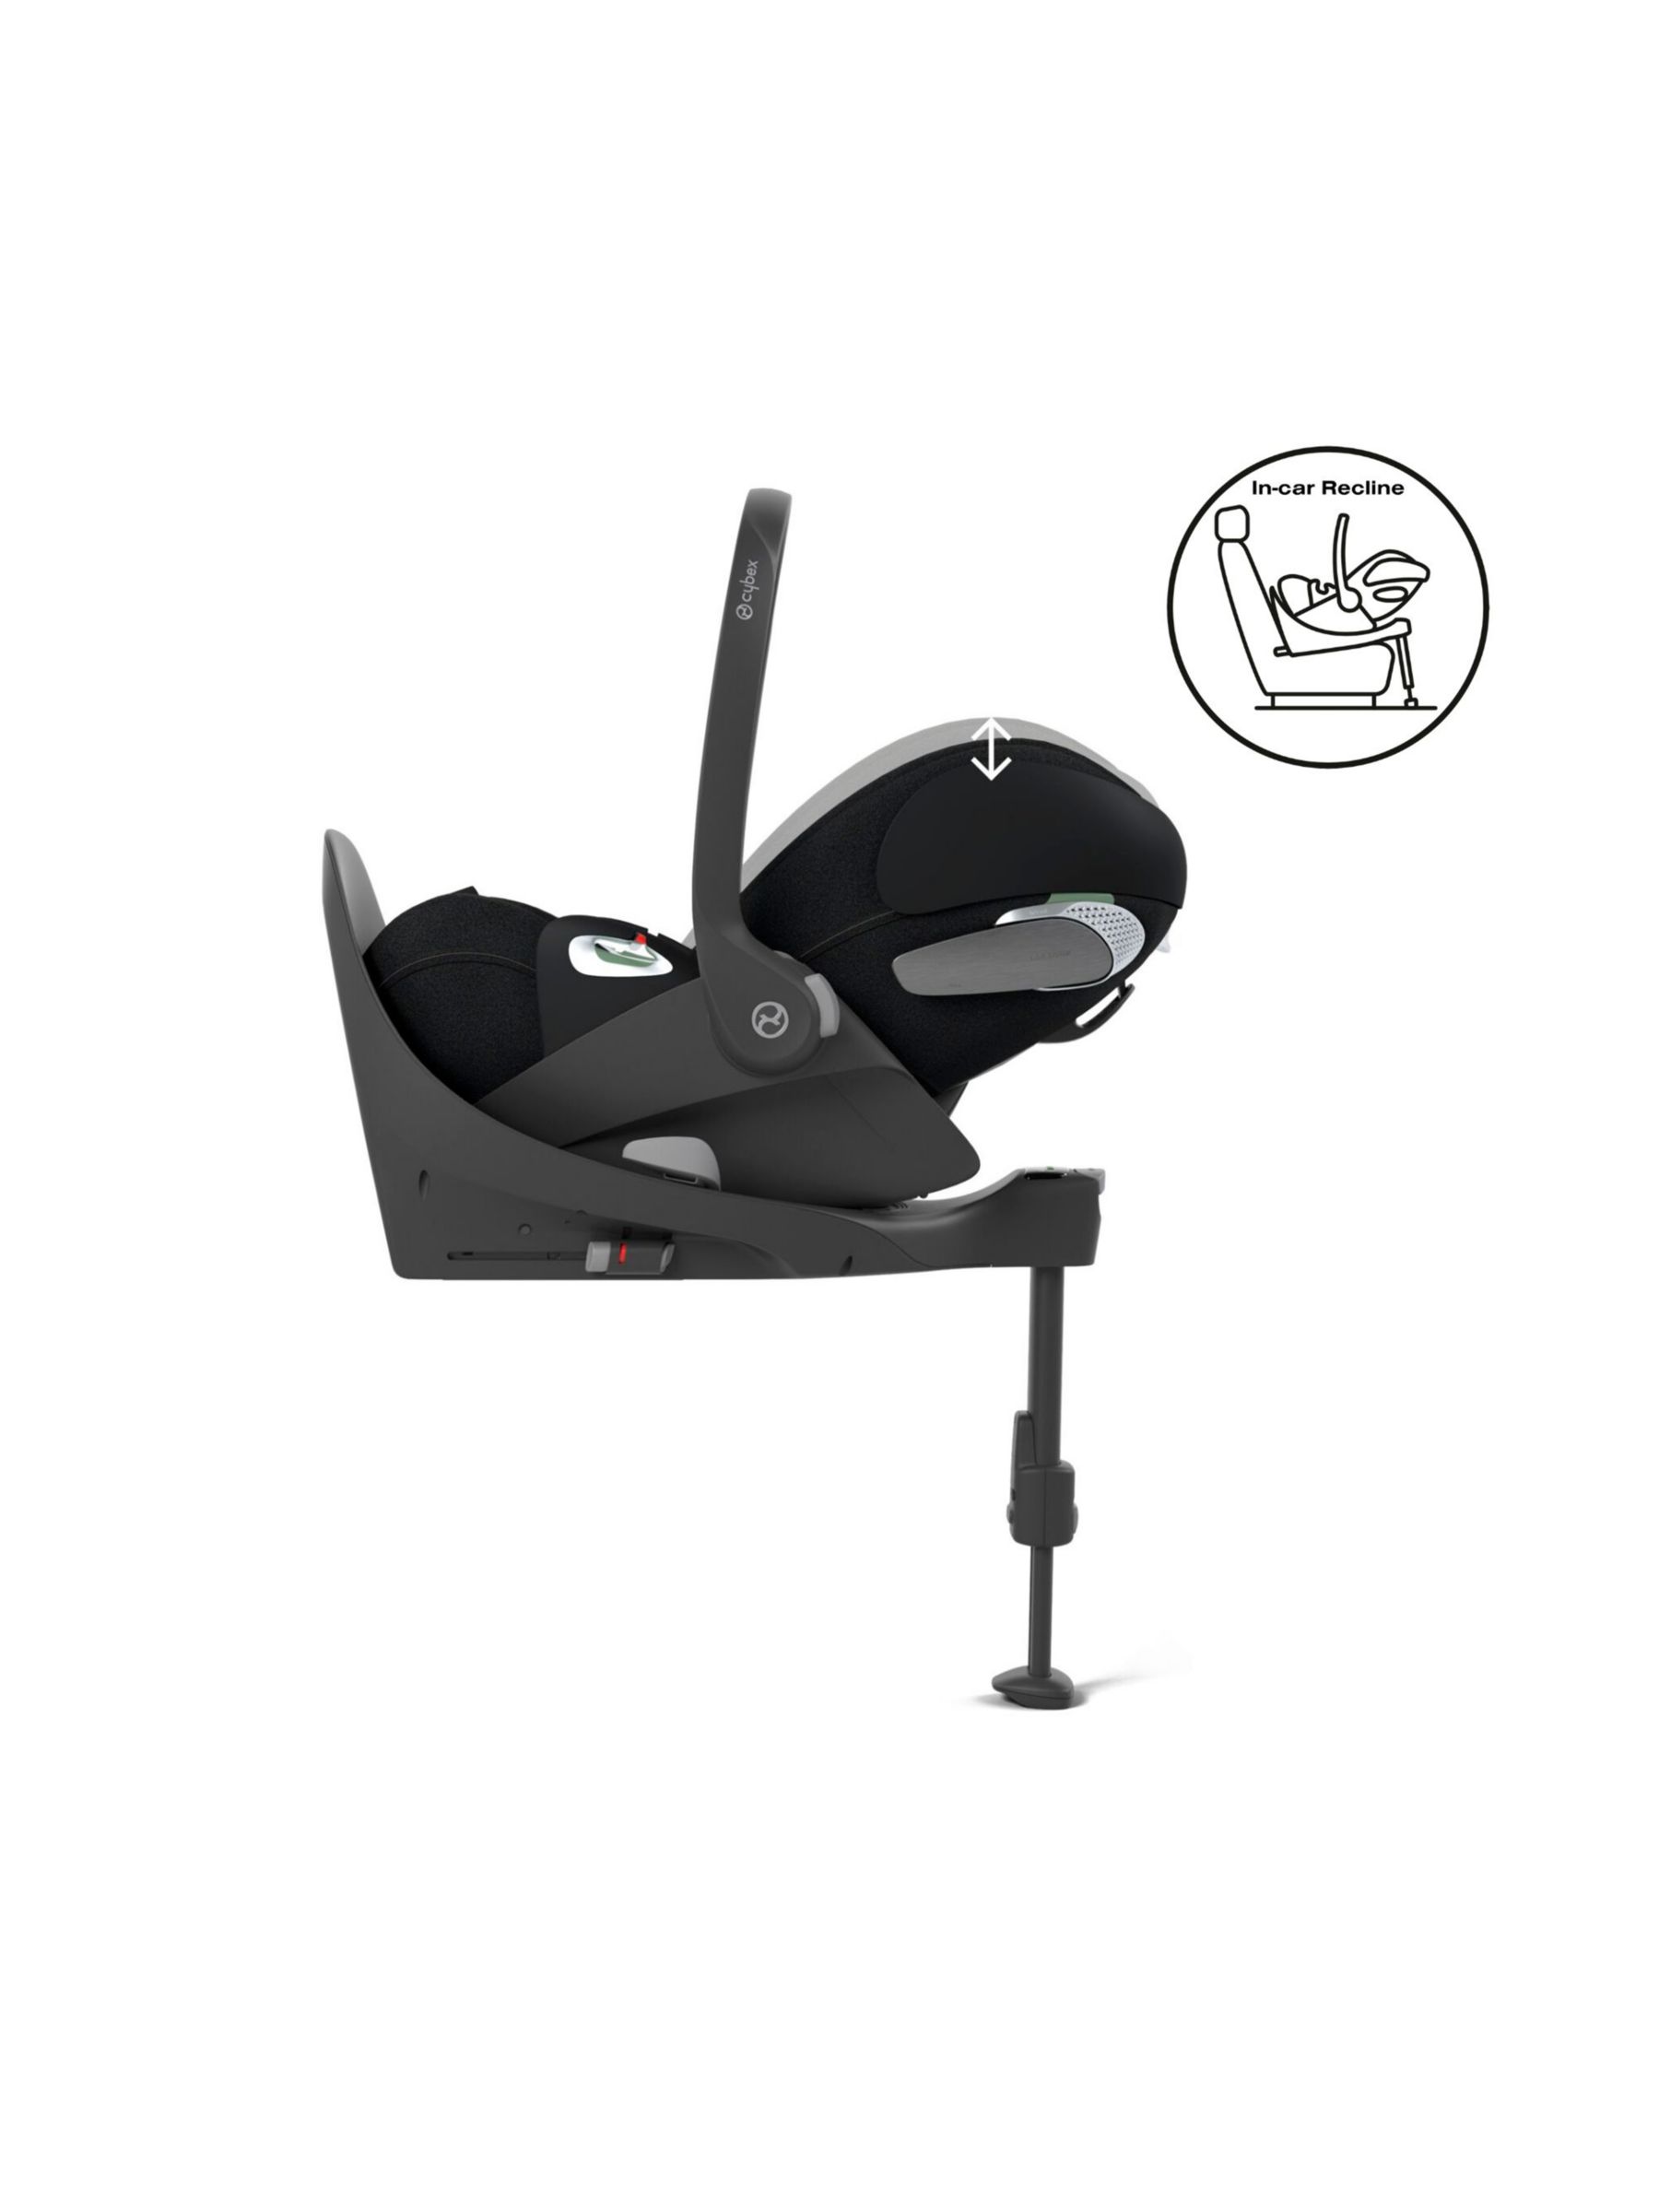 Cloud T i-Size Rotating Baby Car Seat & Base T Bundle, Sepia Black